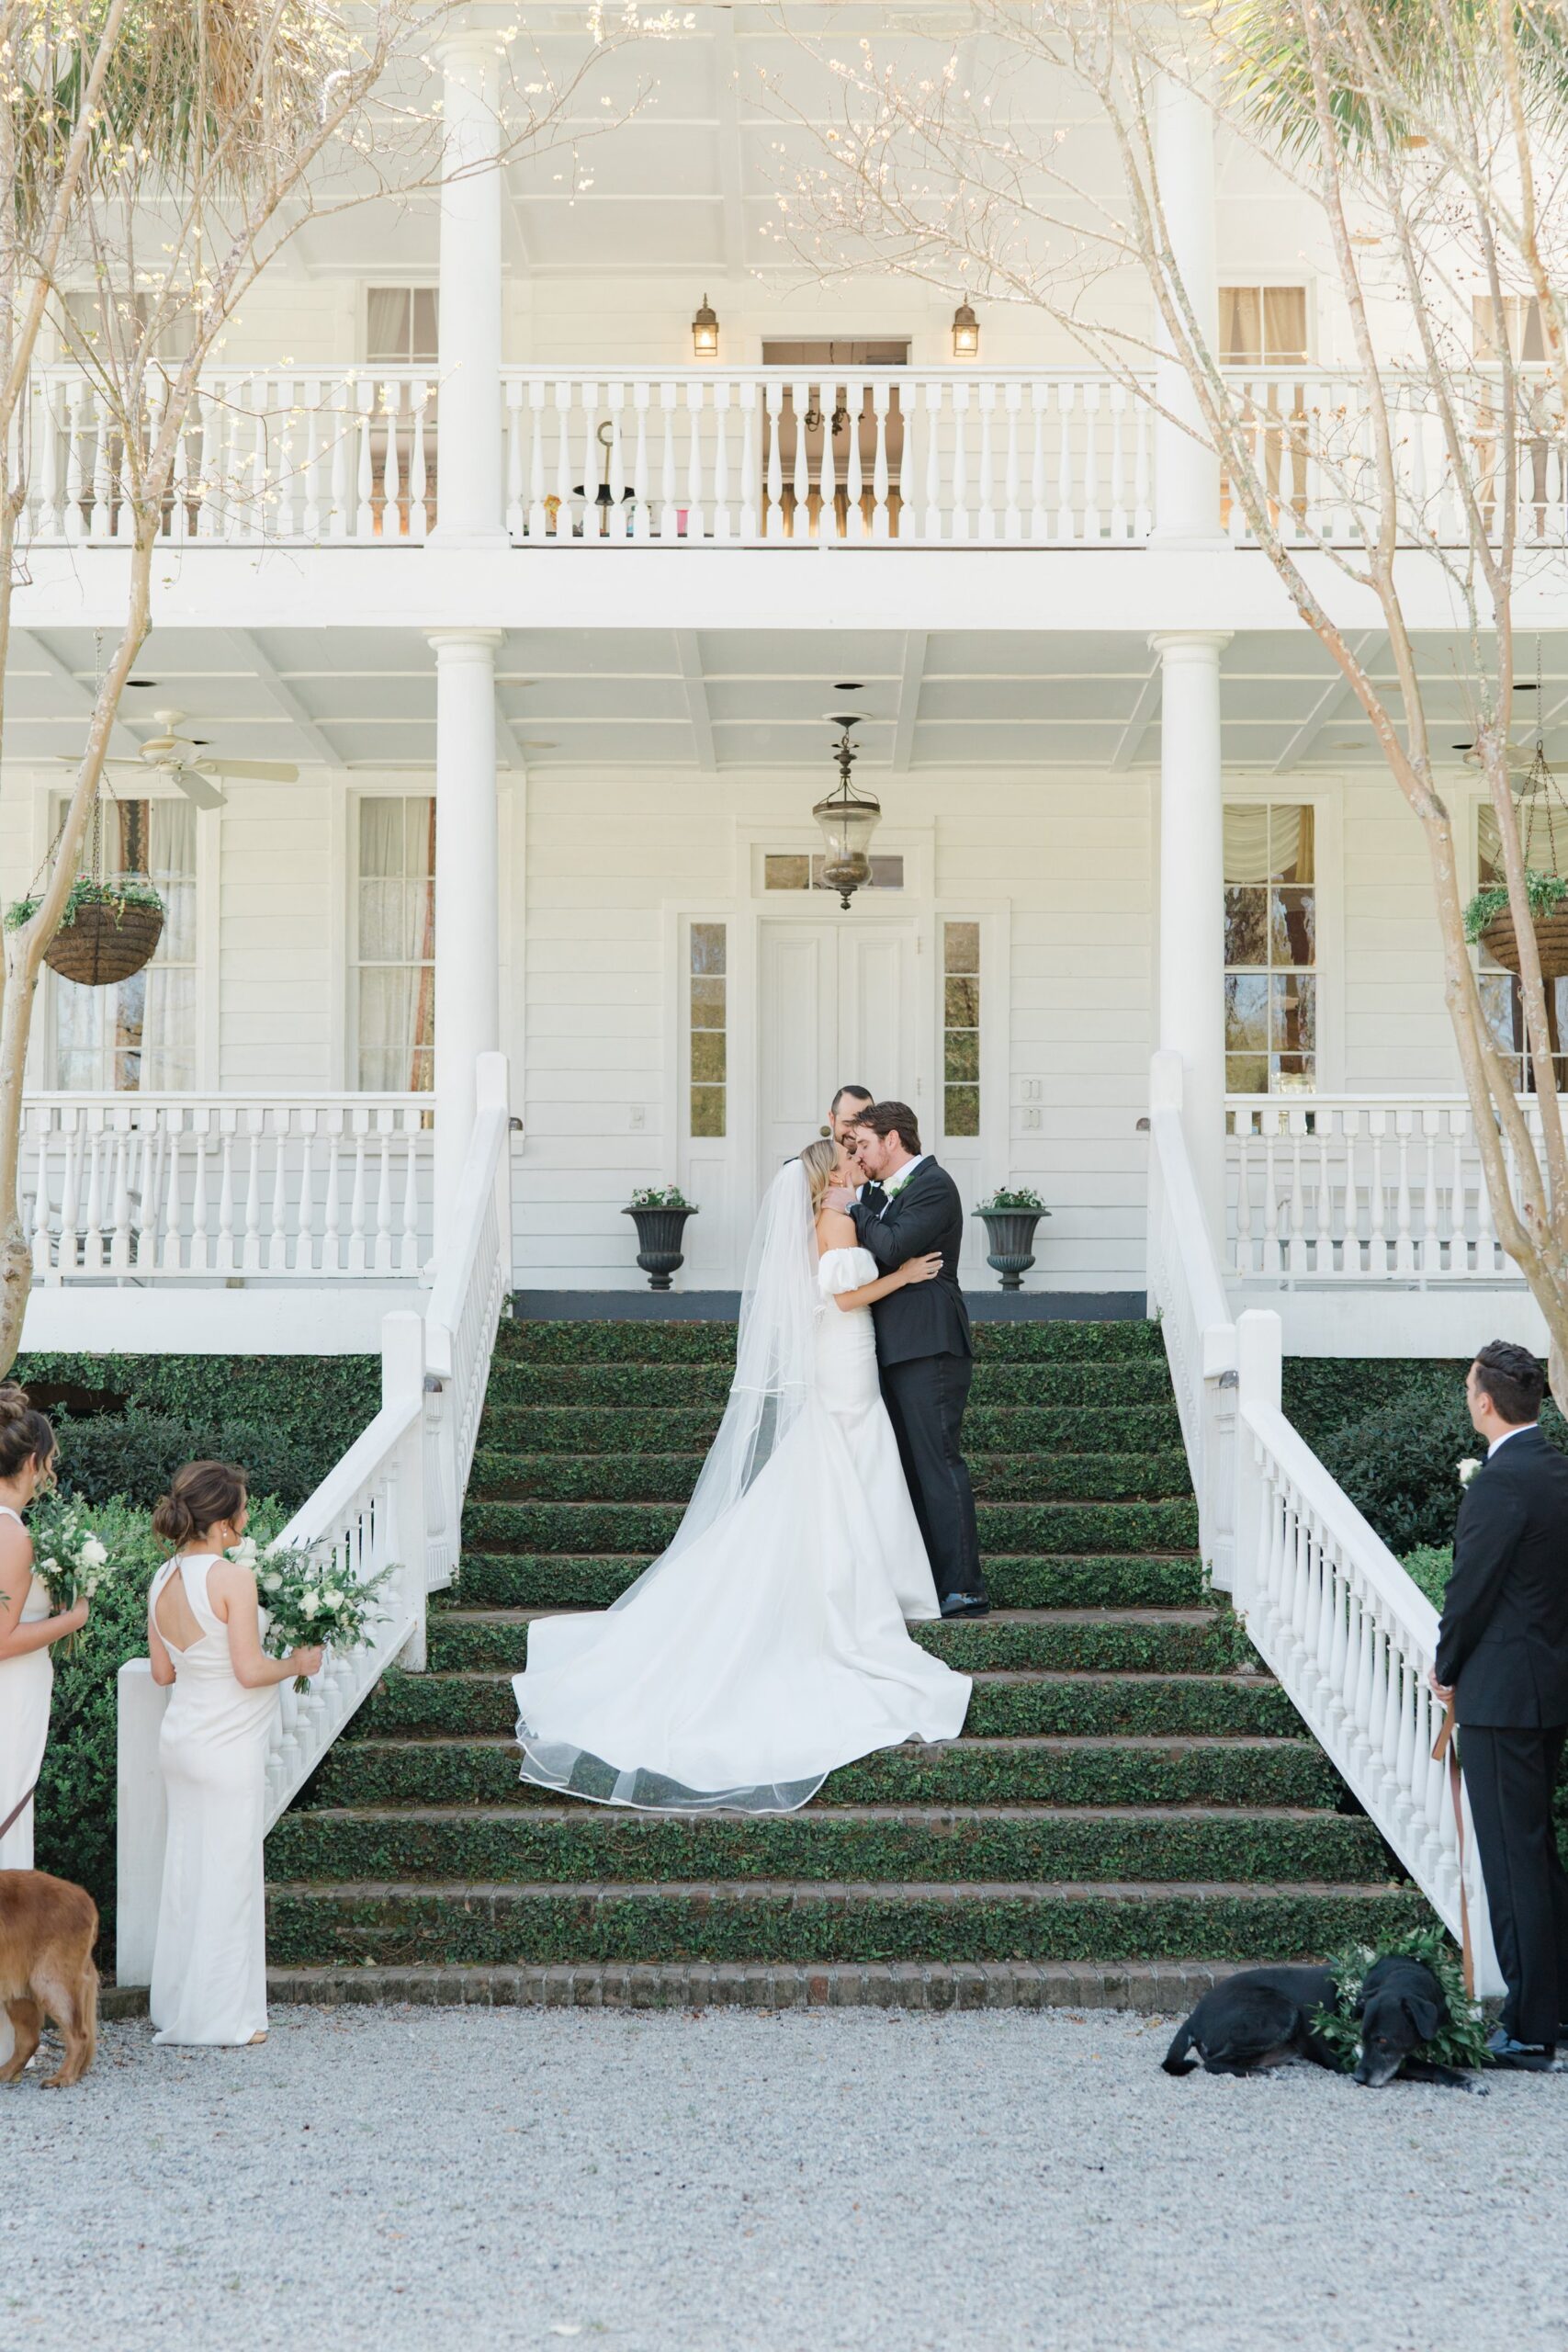 First Kiss at Old Wide Awake. Charleston spring wedding.East Coast Outdoor Destination Wedding Photographer